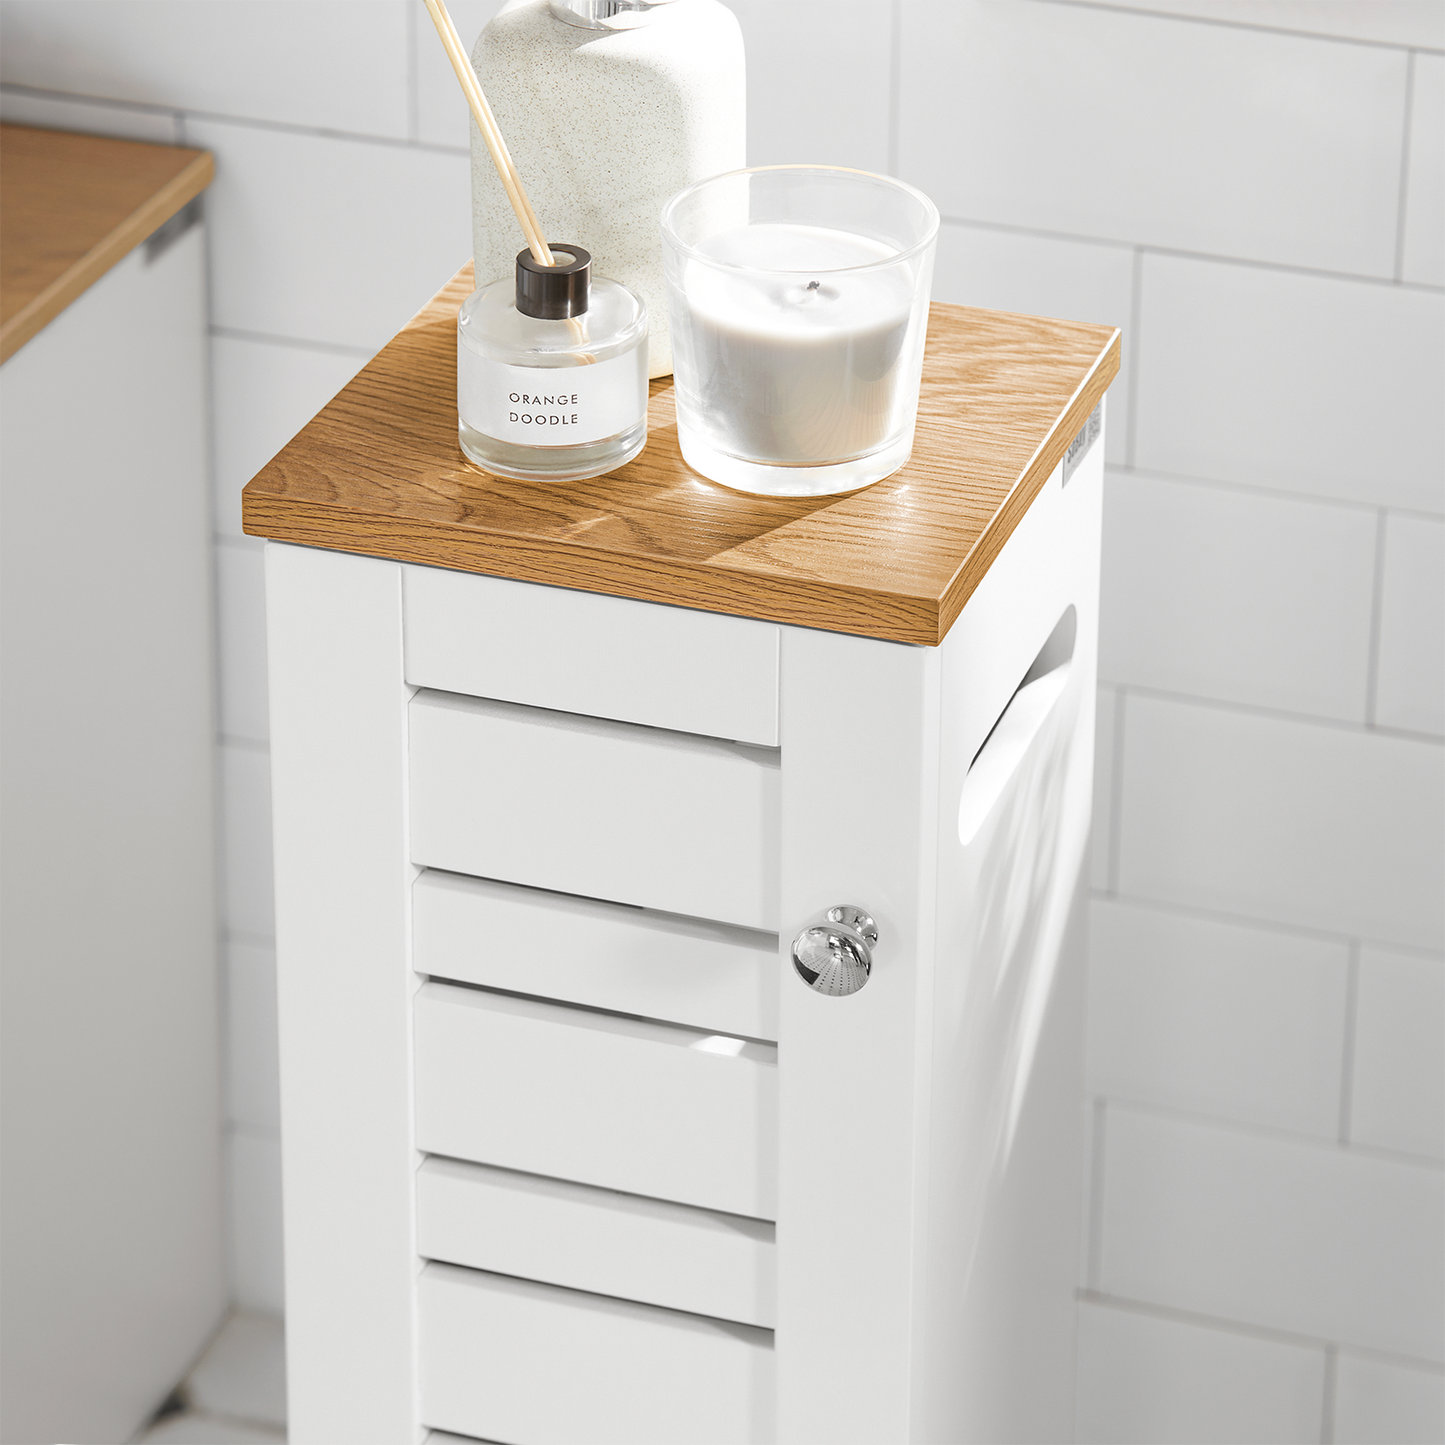 SoBuy Bathroom Toilet Paper Roll Holder Cabinet Storage Cabinet